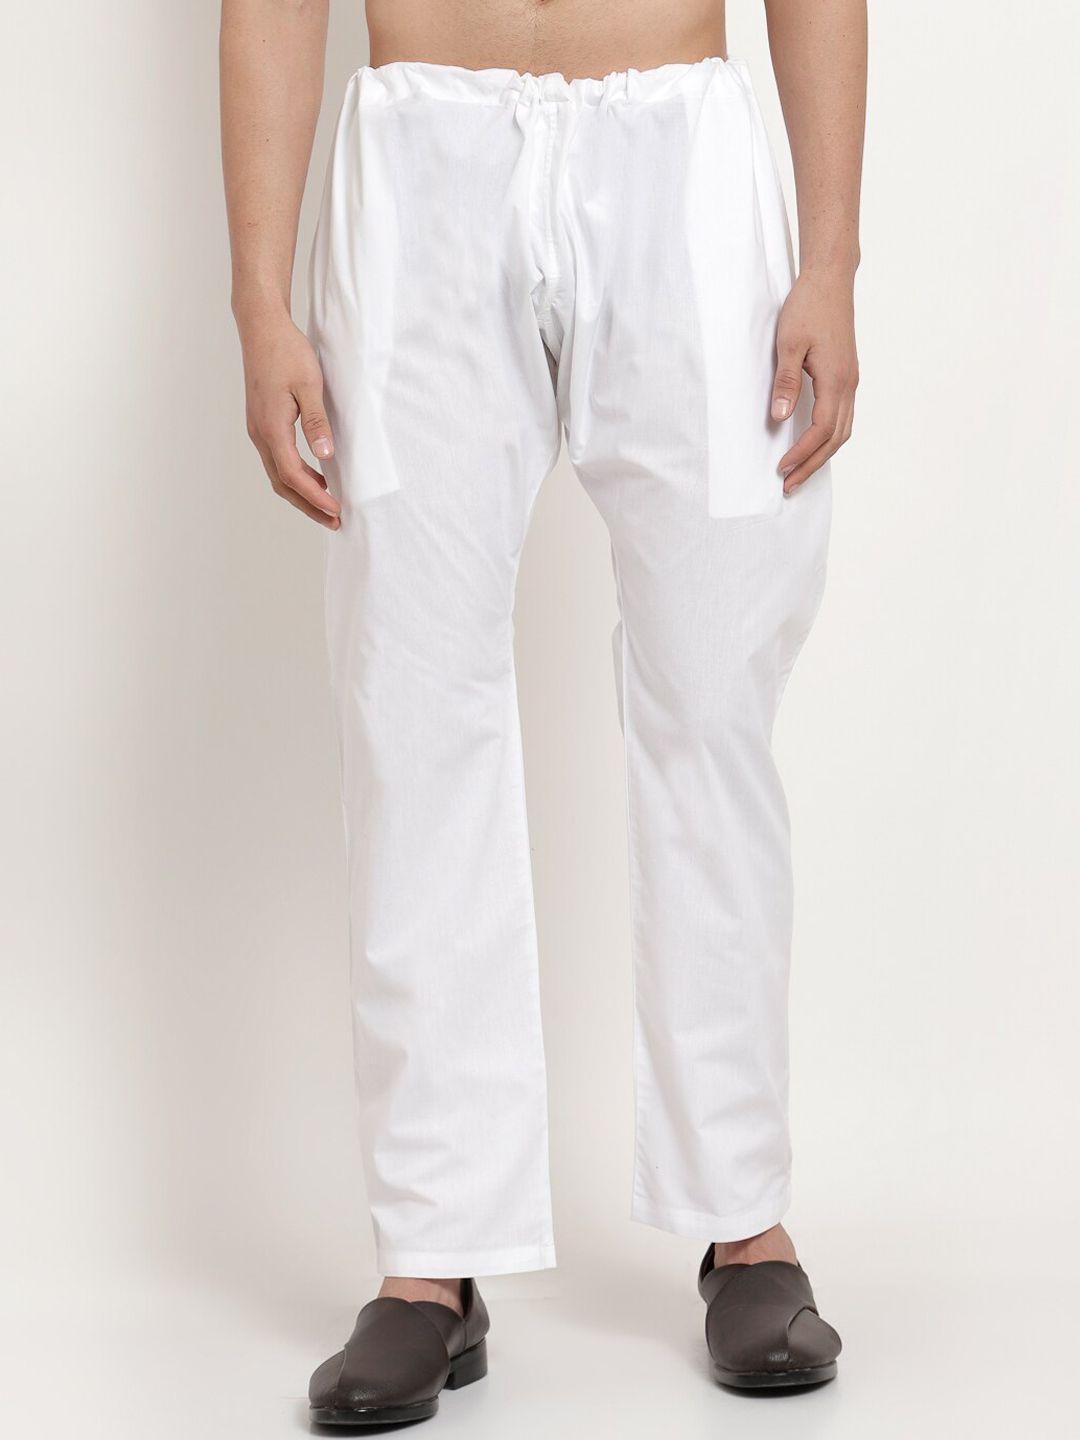 klotthe men white solid cotton pyjamas